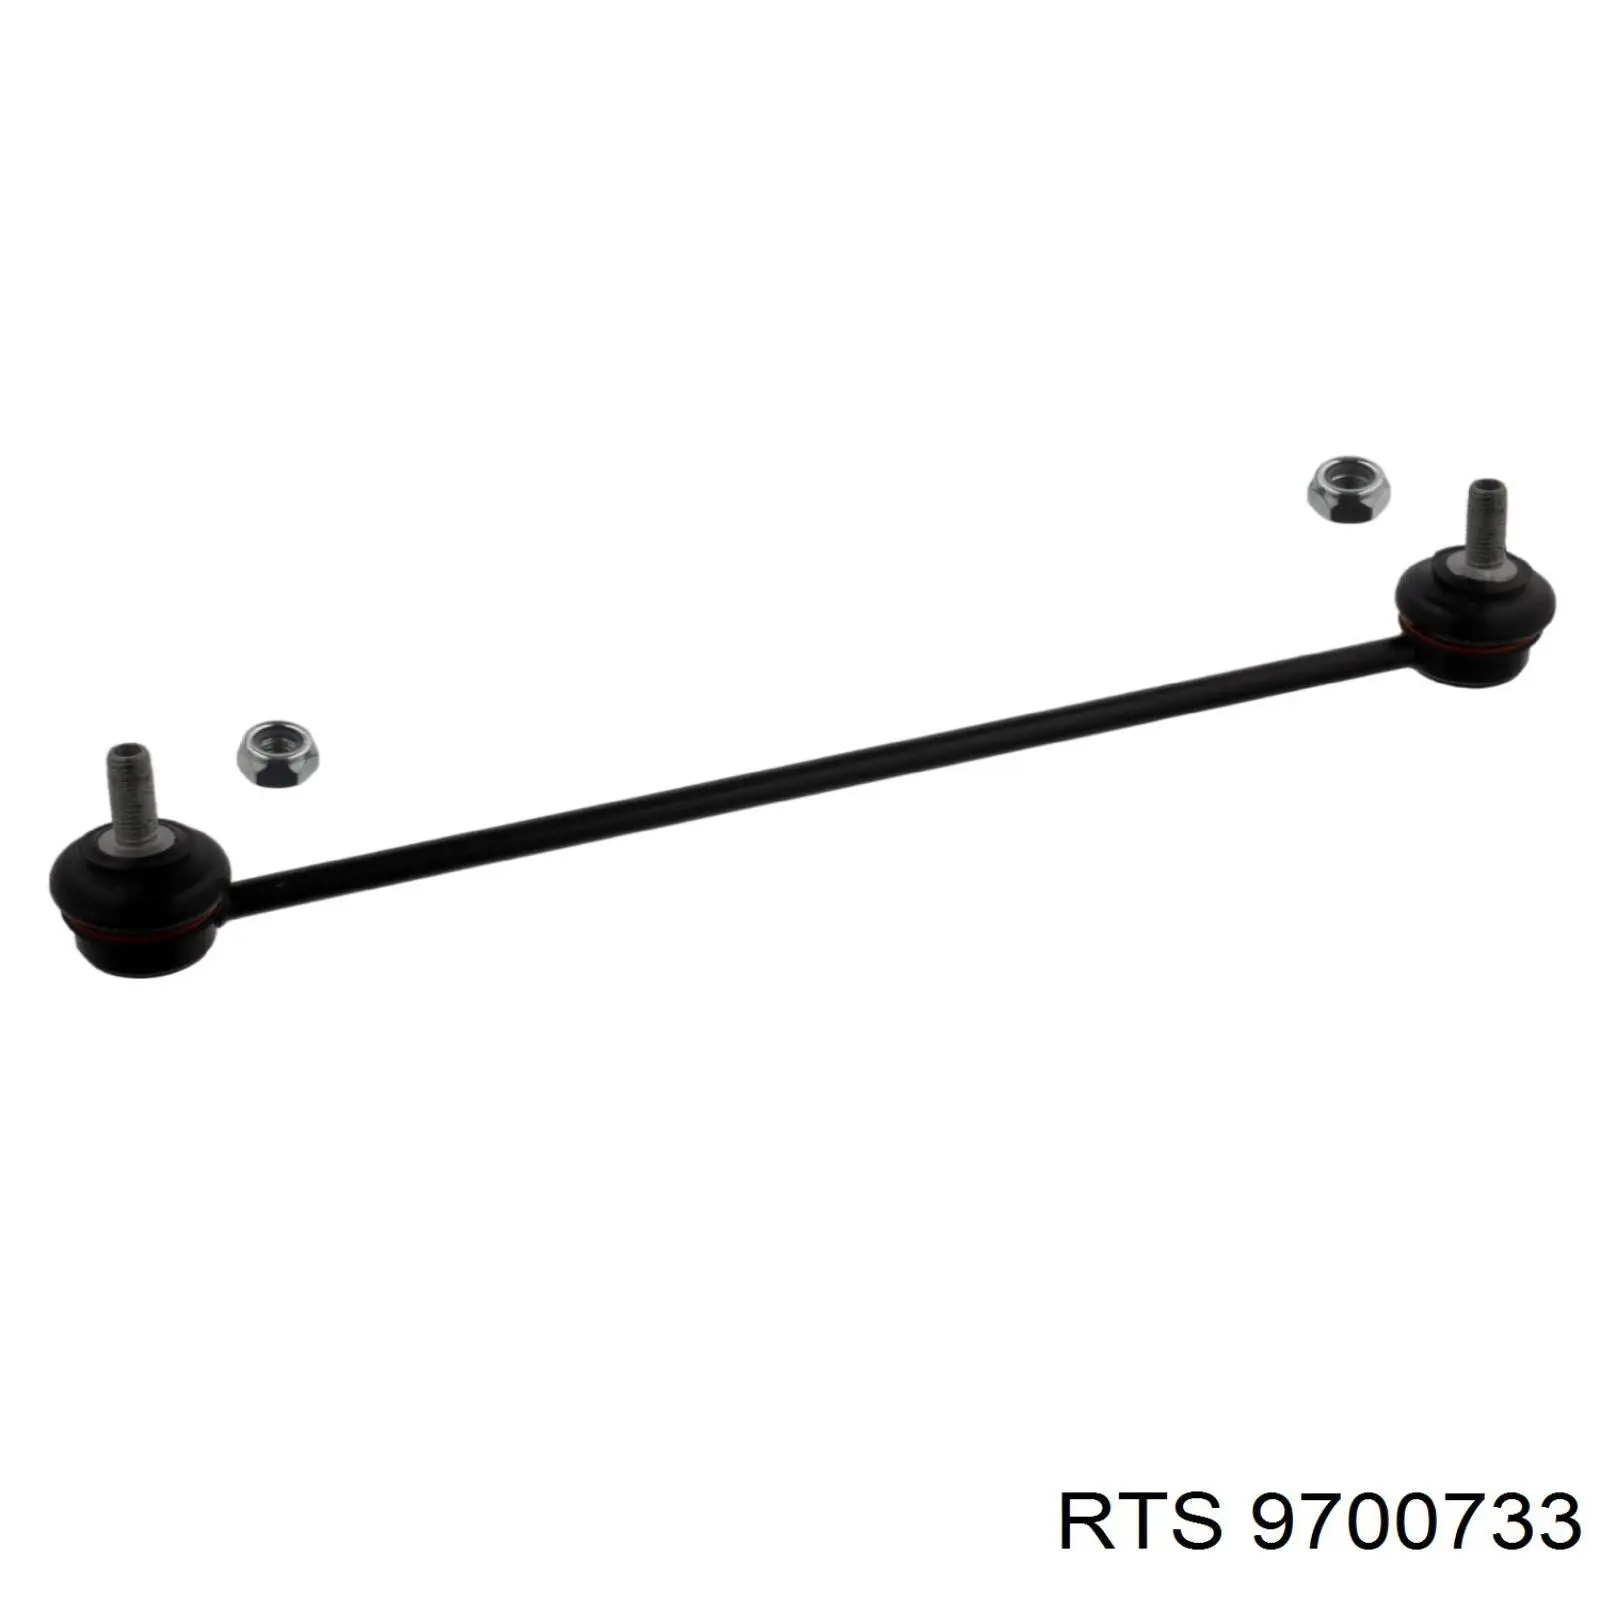 97-00733 RTS soporte de barra estabilizadora delantera